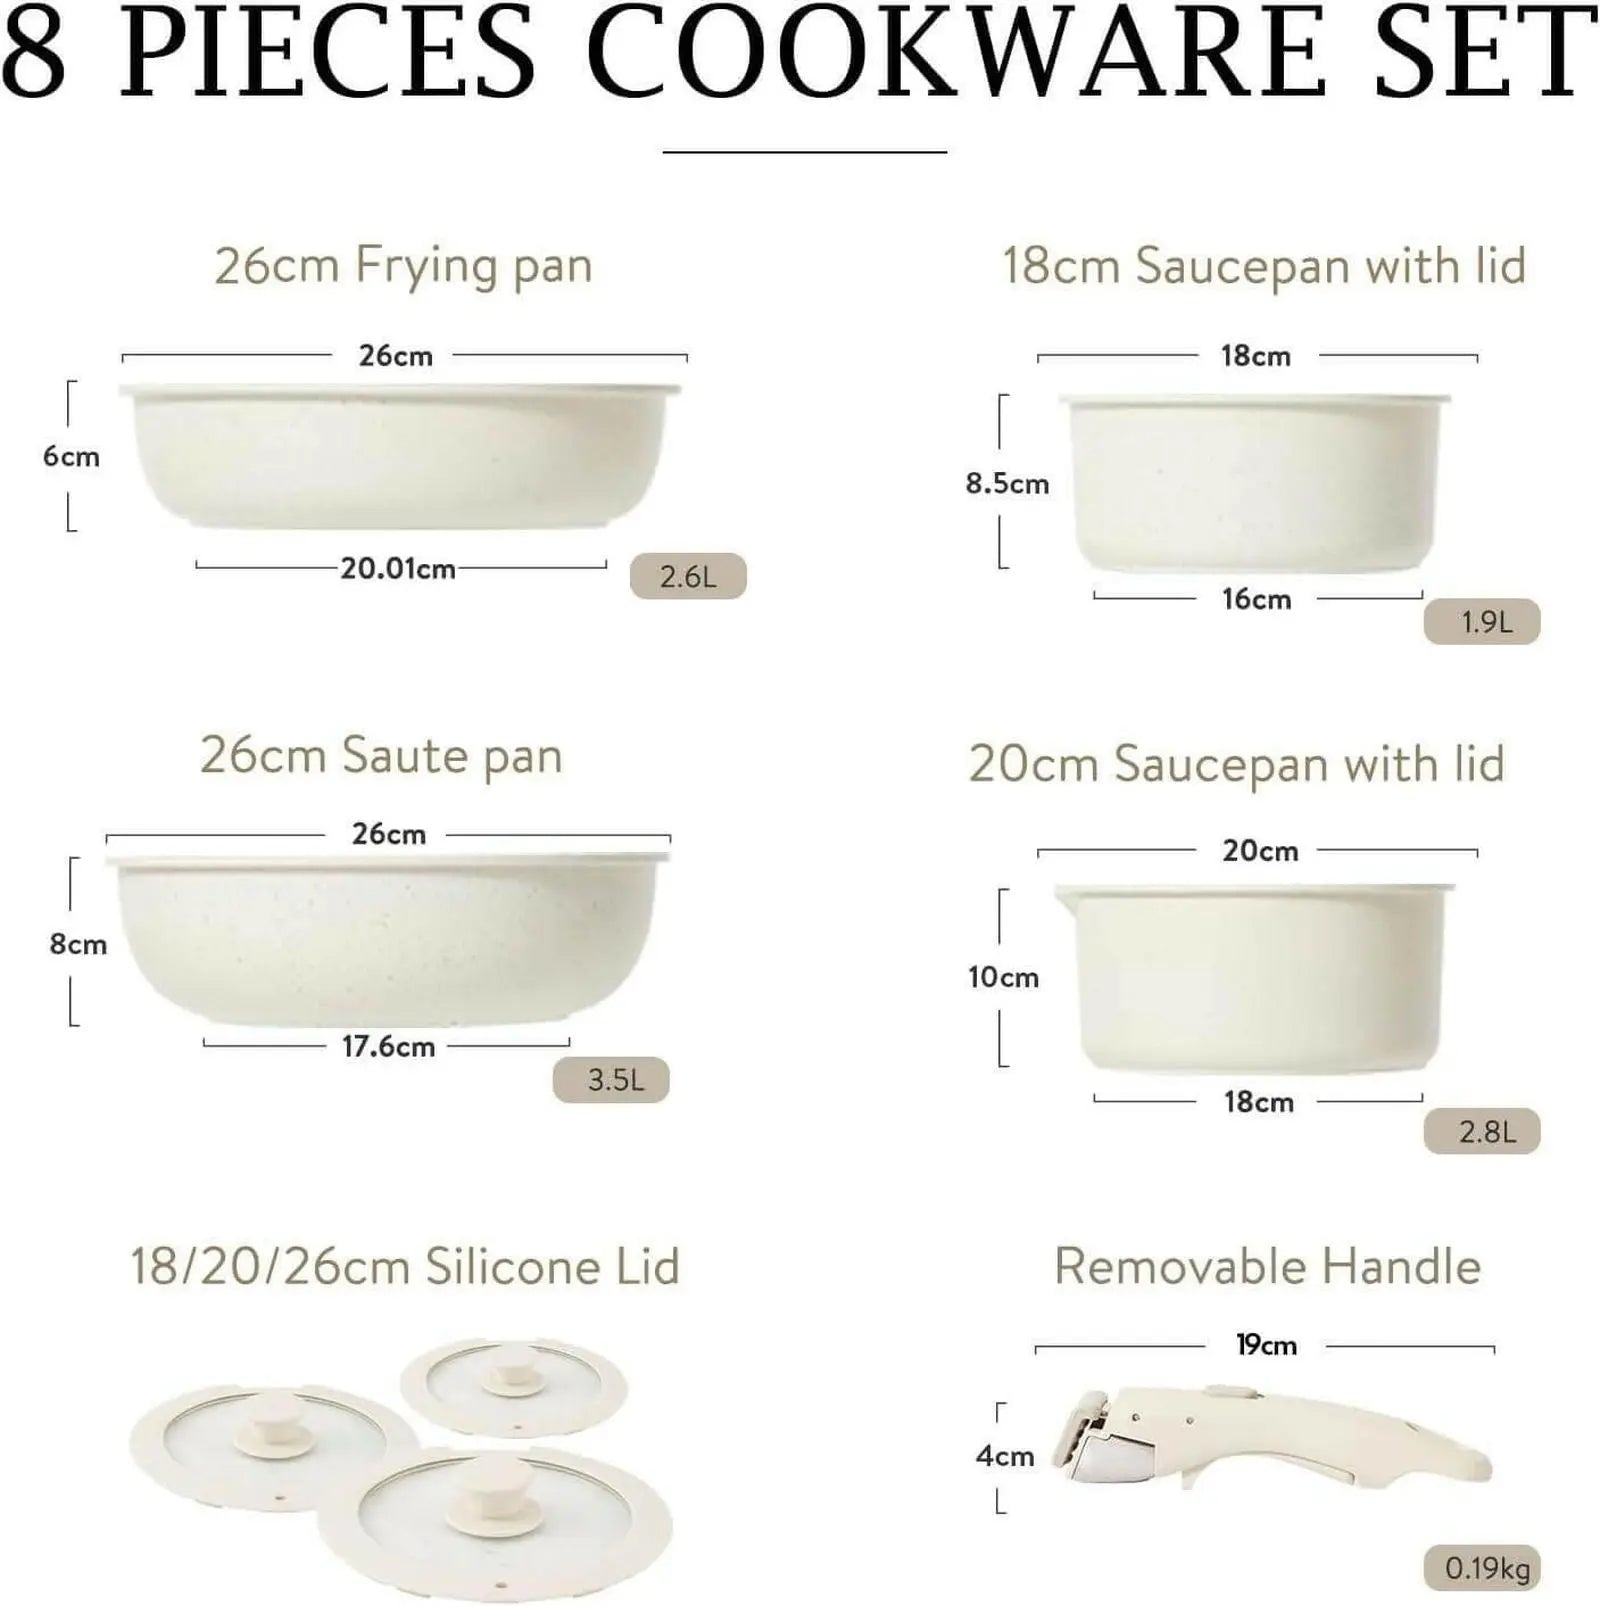 CAROTE 8pcs Pots and Pans Set, Nonstick Cookware Set Detachable Handle, Induction Kitchen Cookware Sets Non Stick with Removable Handle